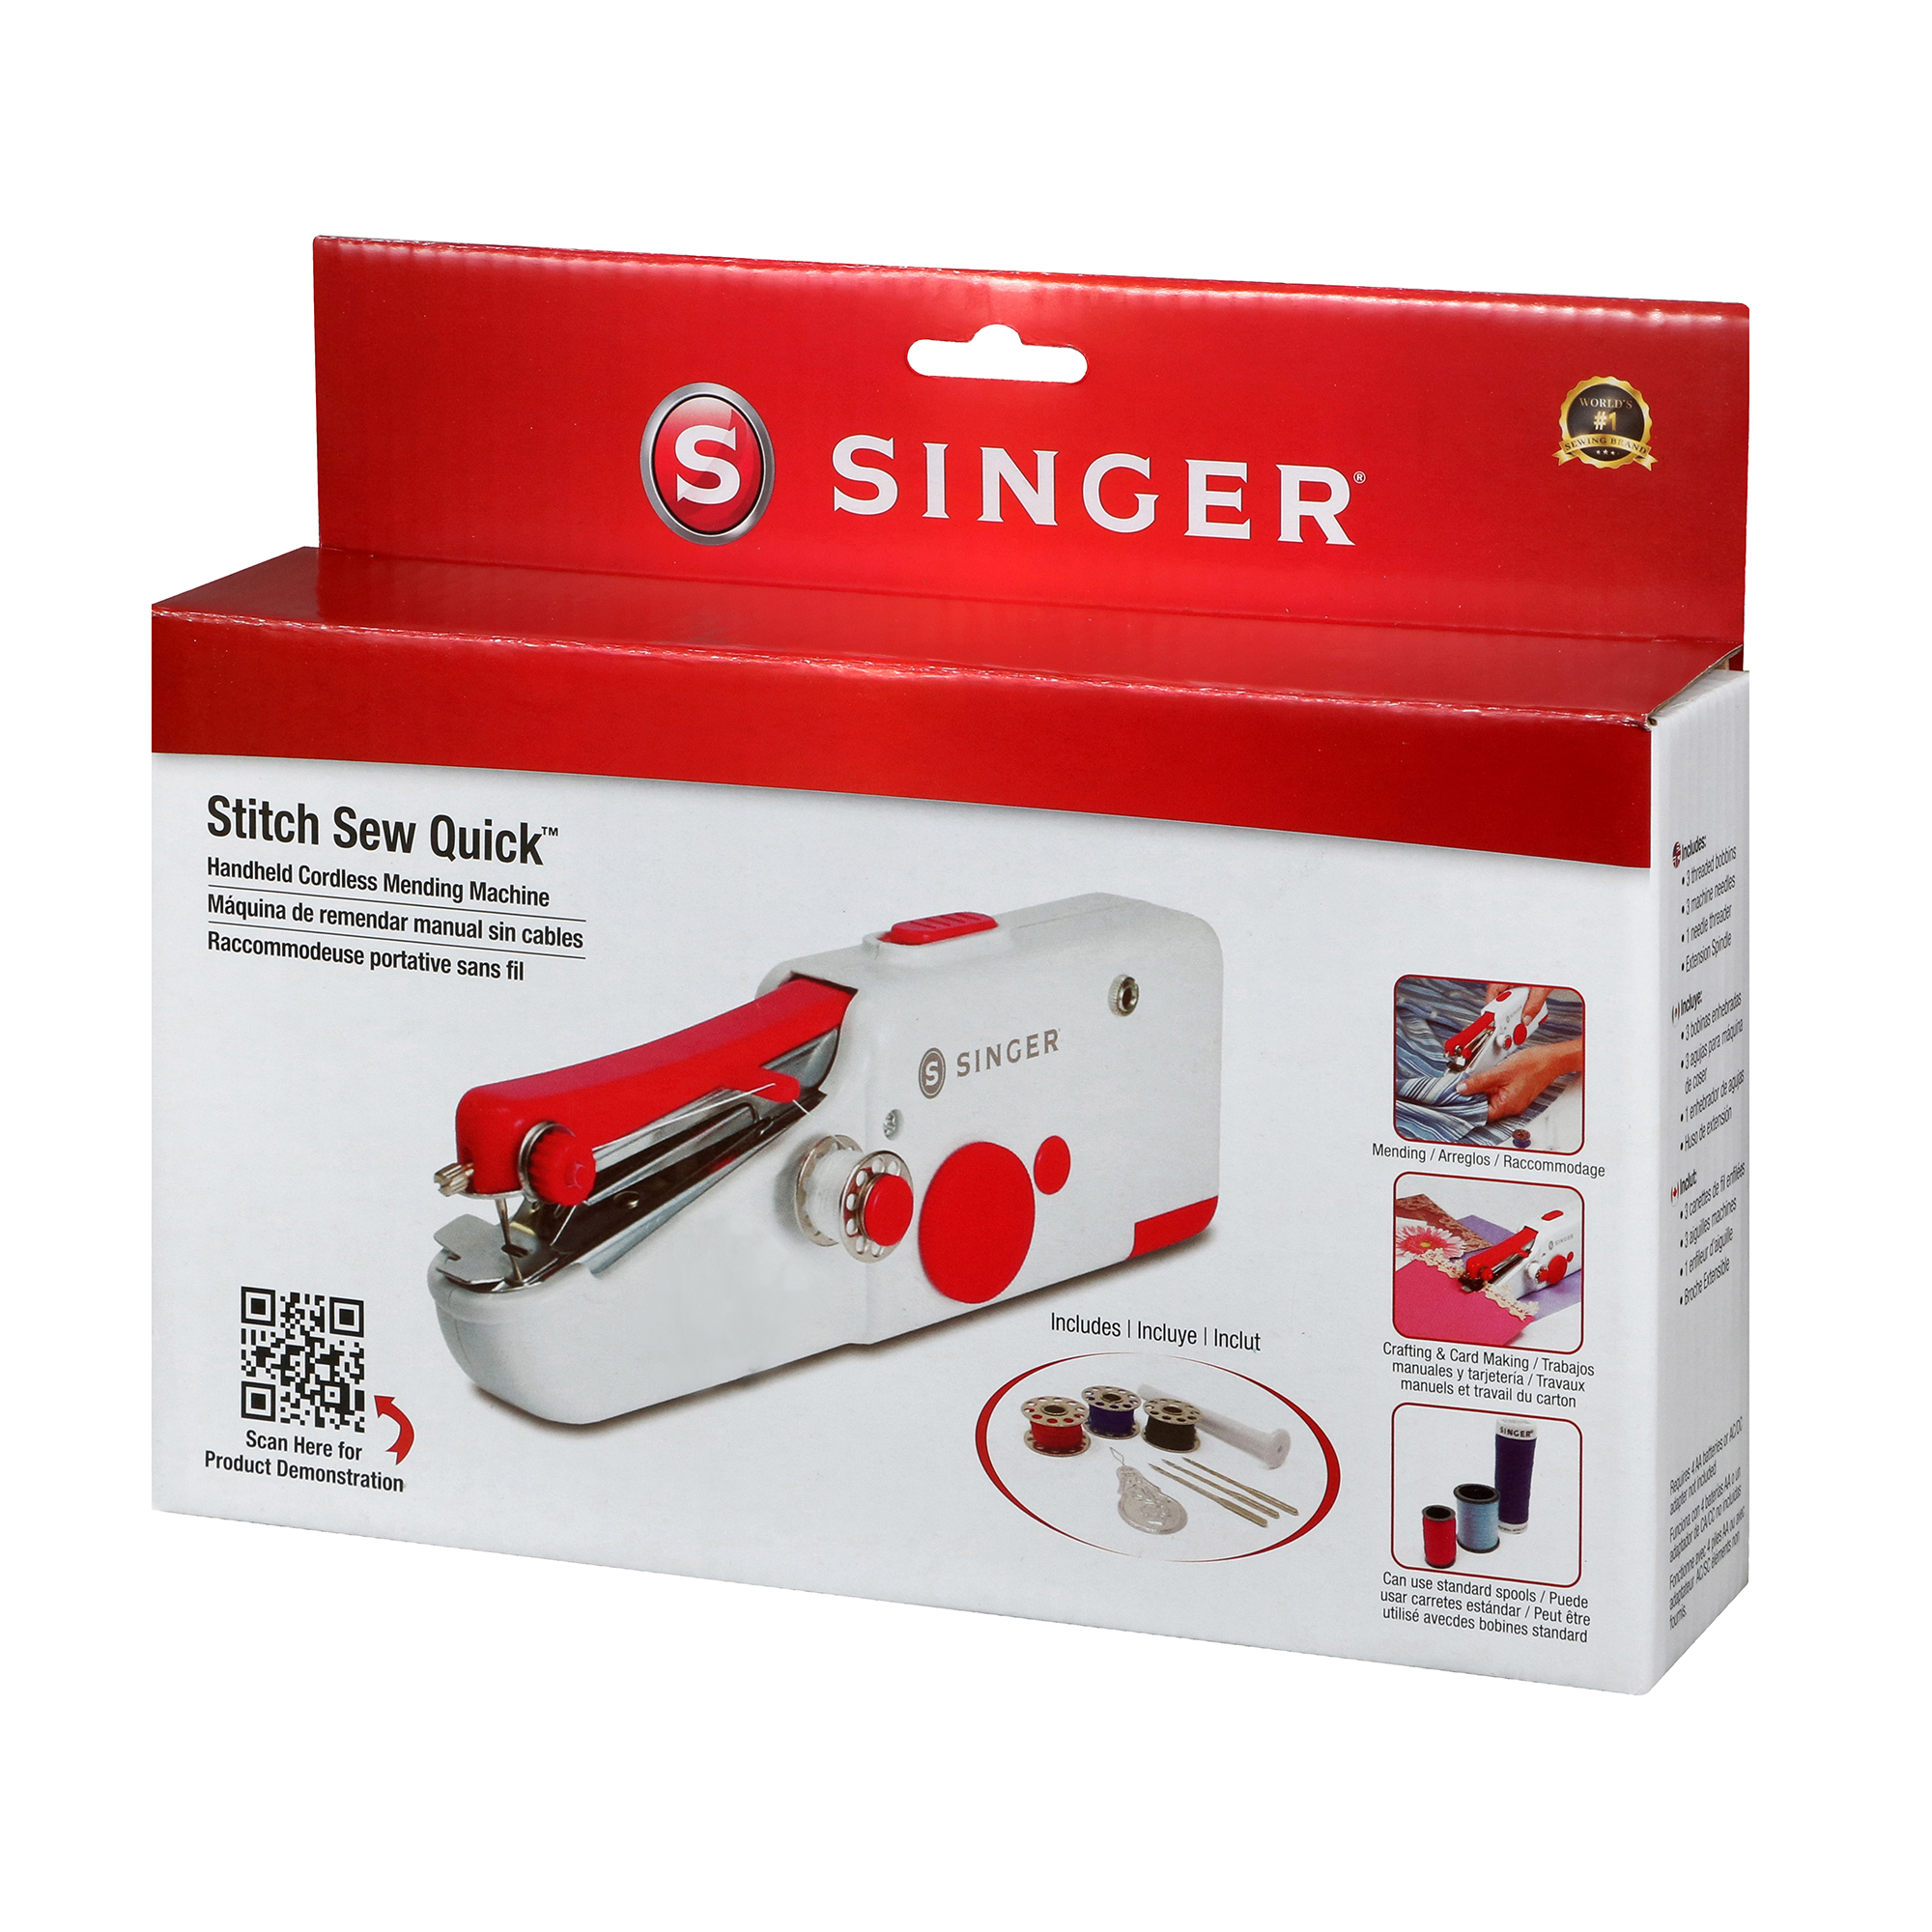 SINGER Stitch Sew Quick Handheld Mending Machine - image 2 of 6